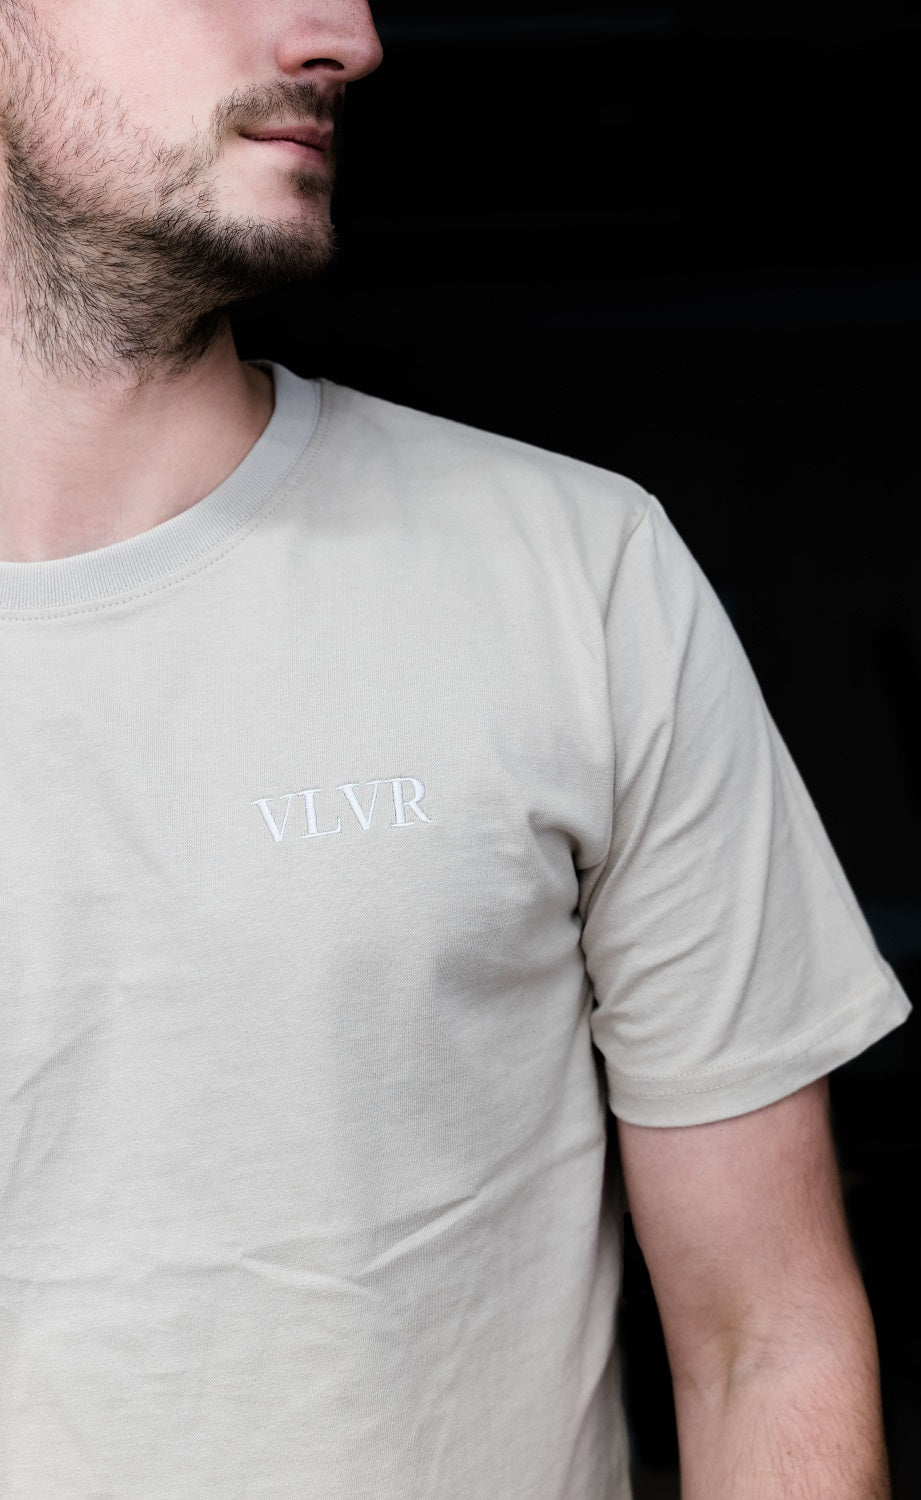 VLVR Brust Logo